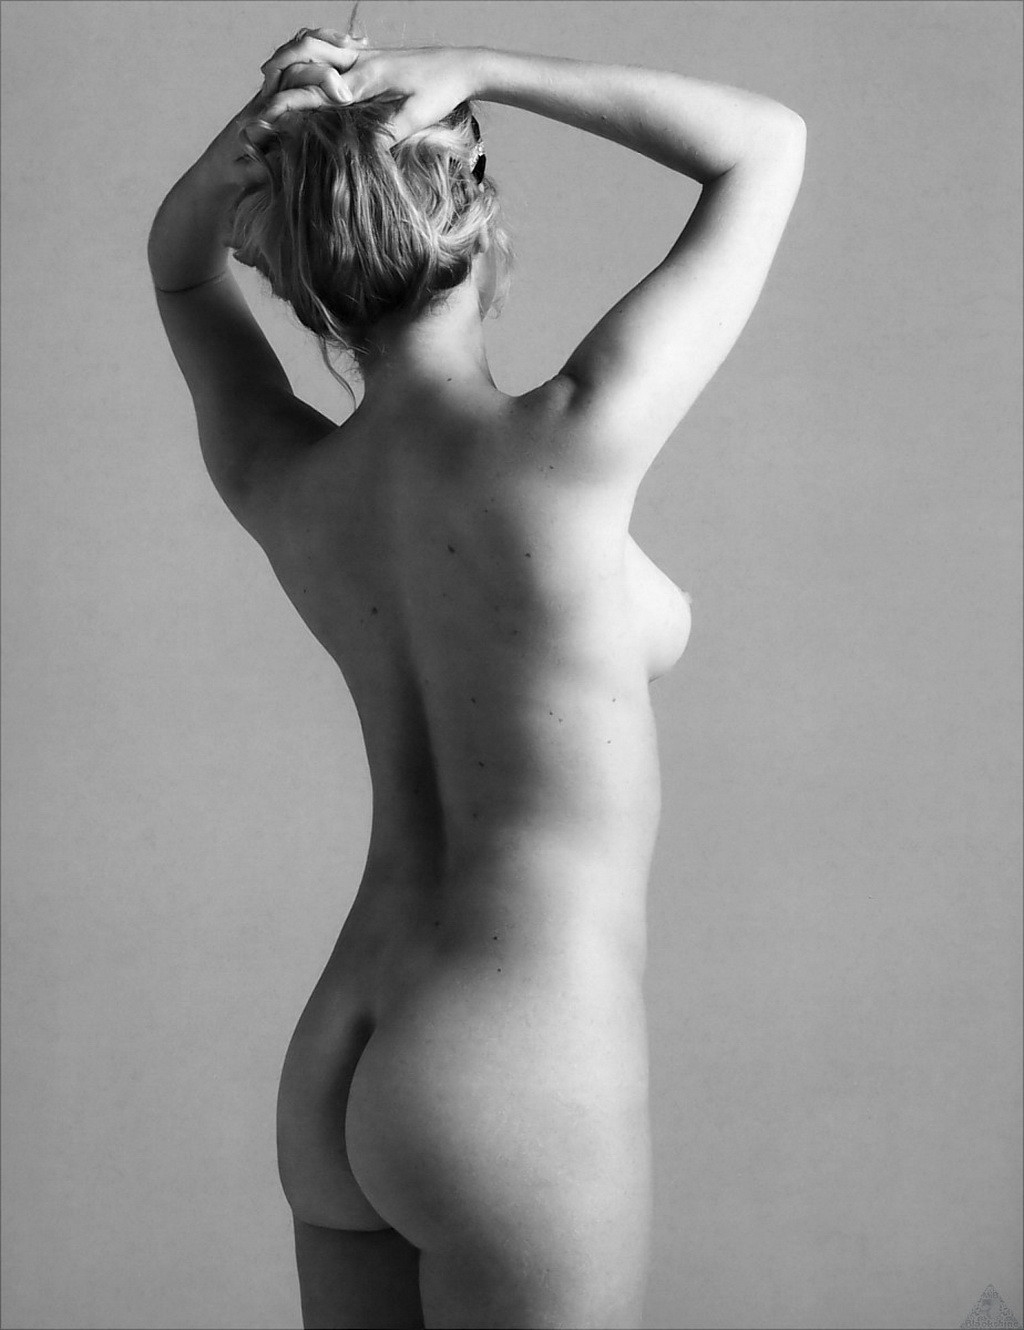 Chloe Sevigny fully nude in boots for blackwhite photoshoot #75306233